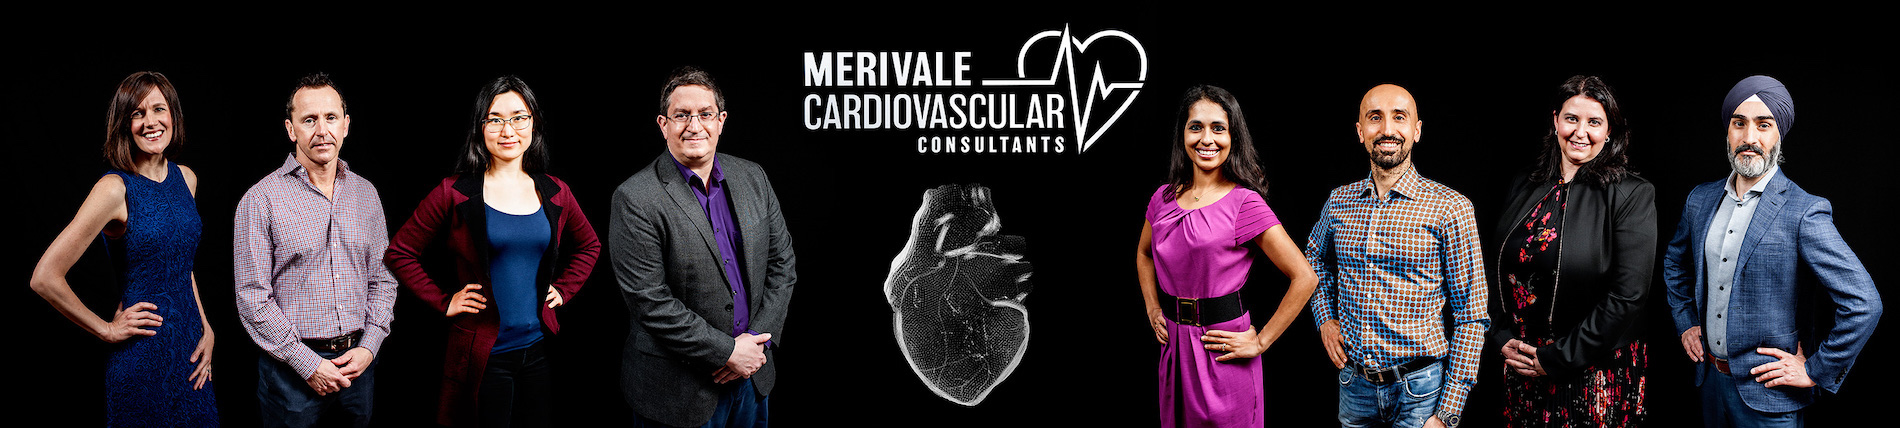 Merivale Cardiovascular Consultants doctors